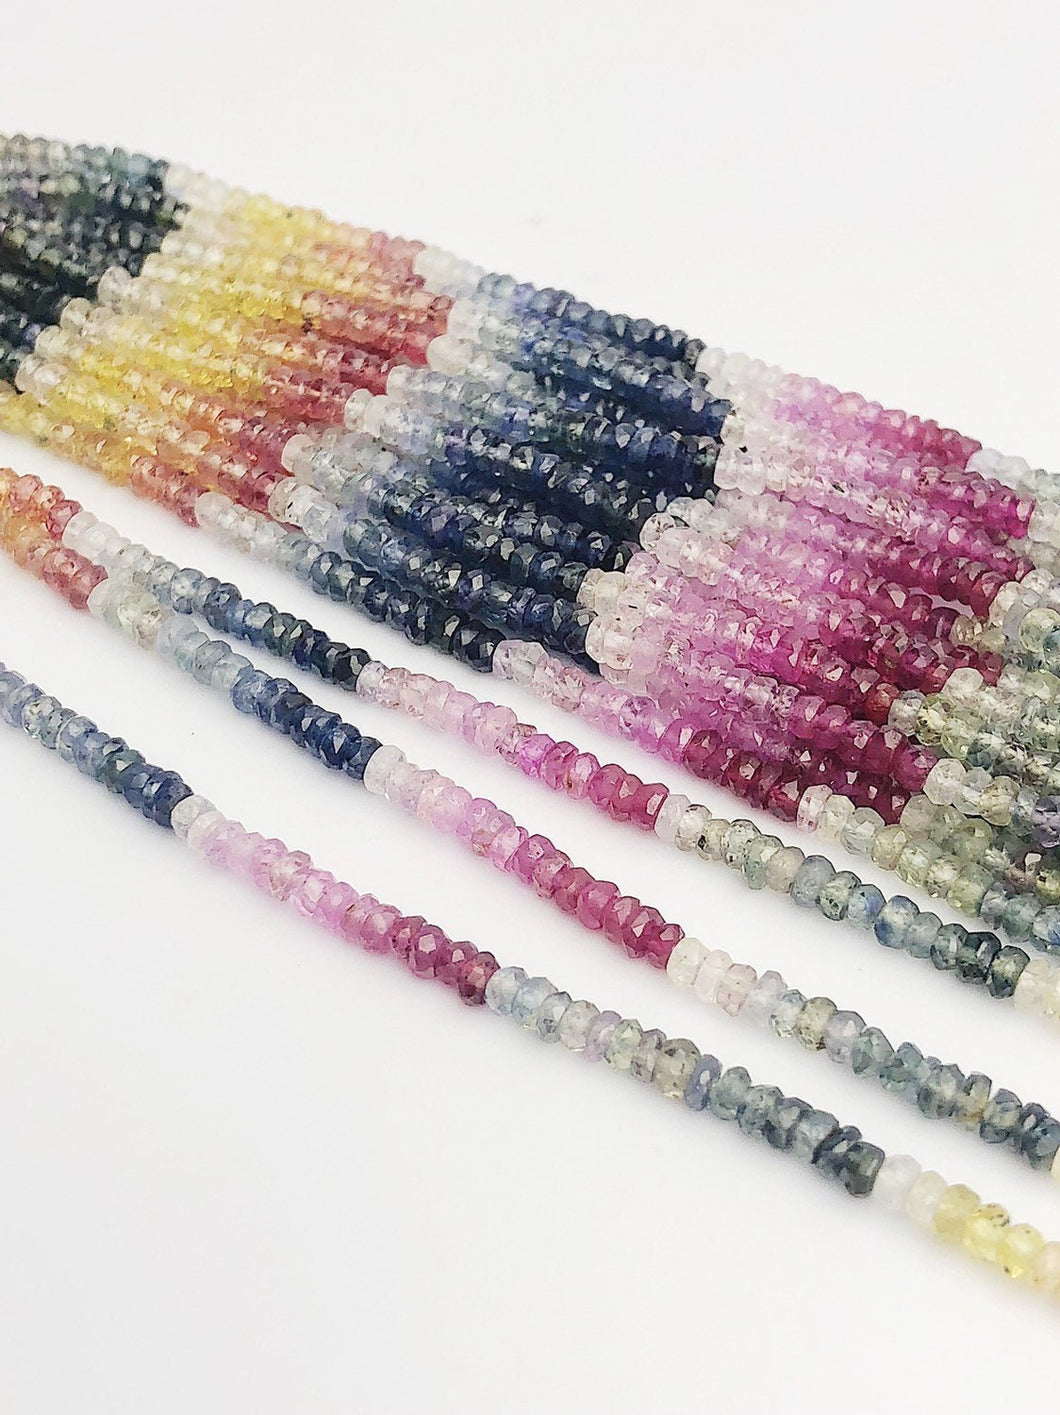 HALF OFF SALE - Rainbow Sapphire Gemstone Beads, Full Strand, Semi Precious Gemstone, 13